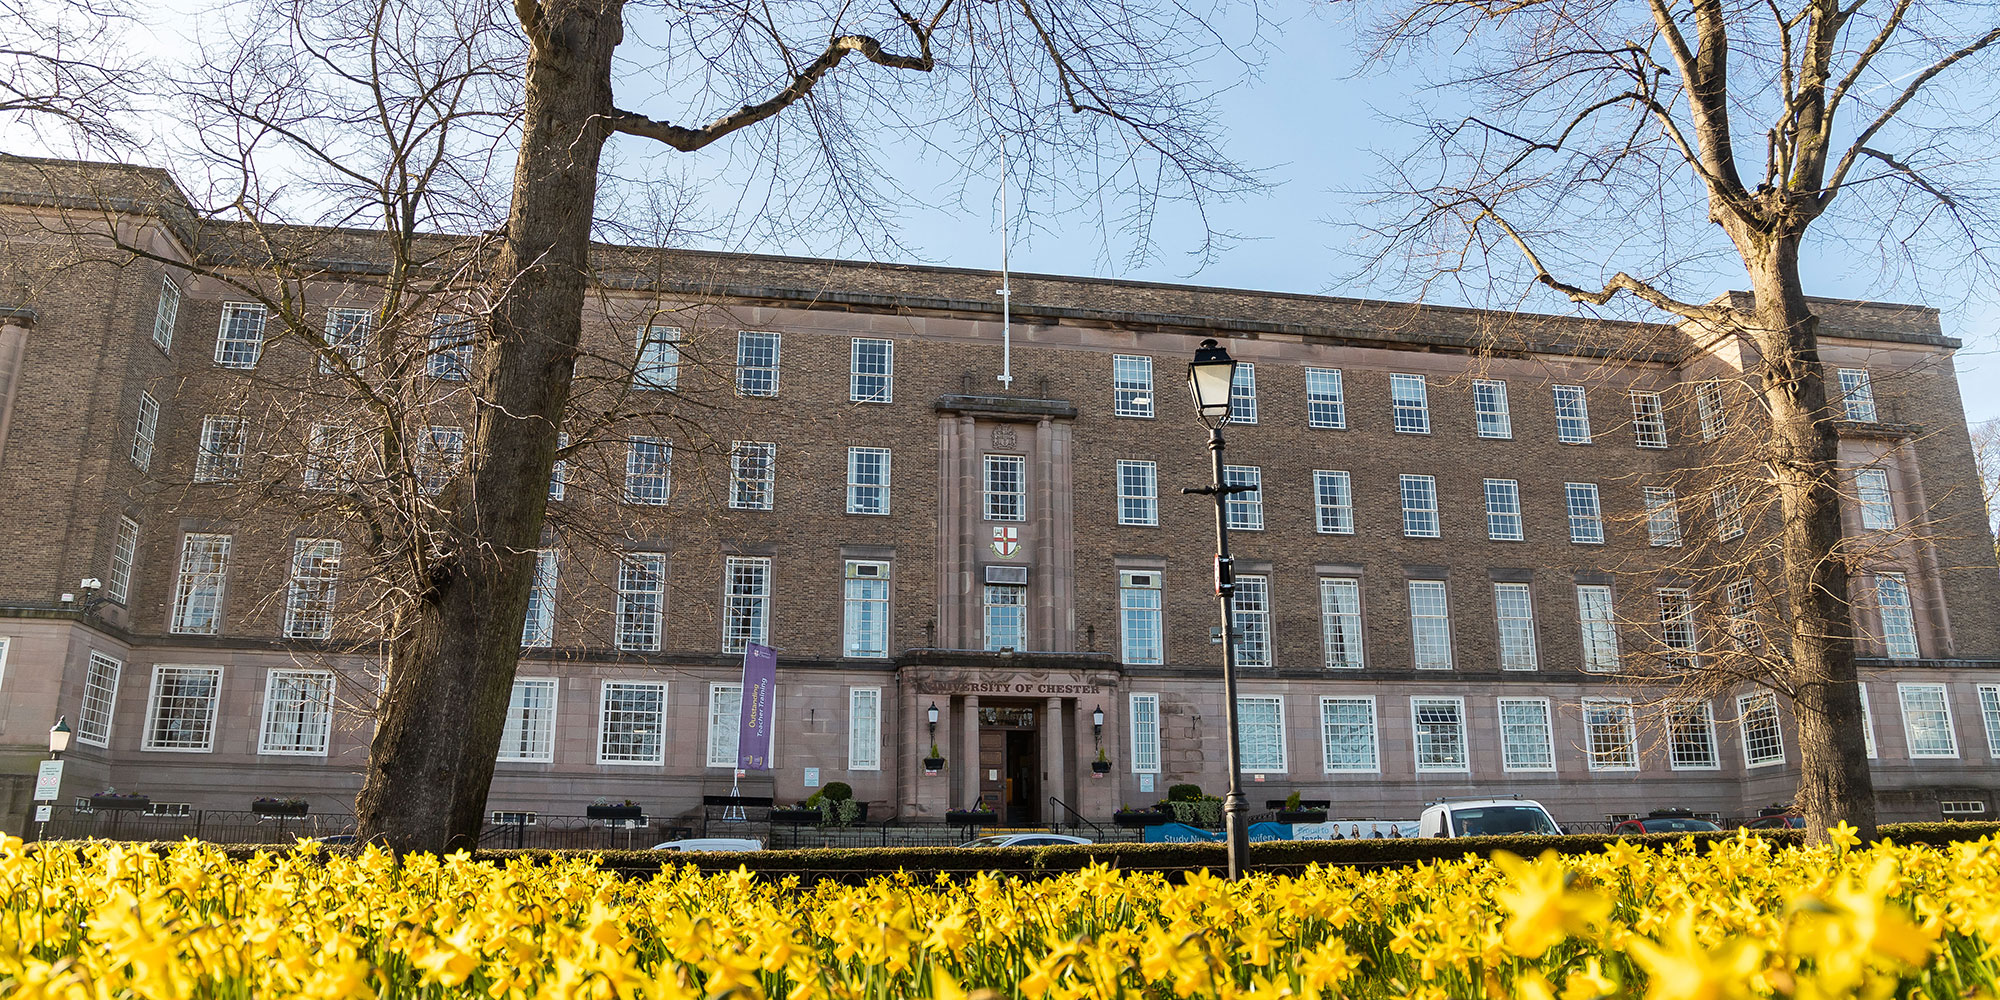 University of Chester Riverside Museum open